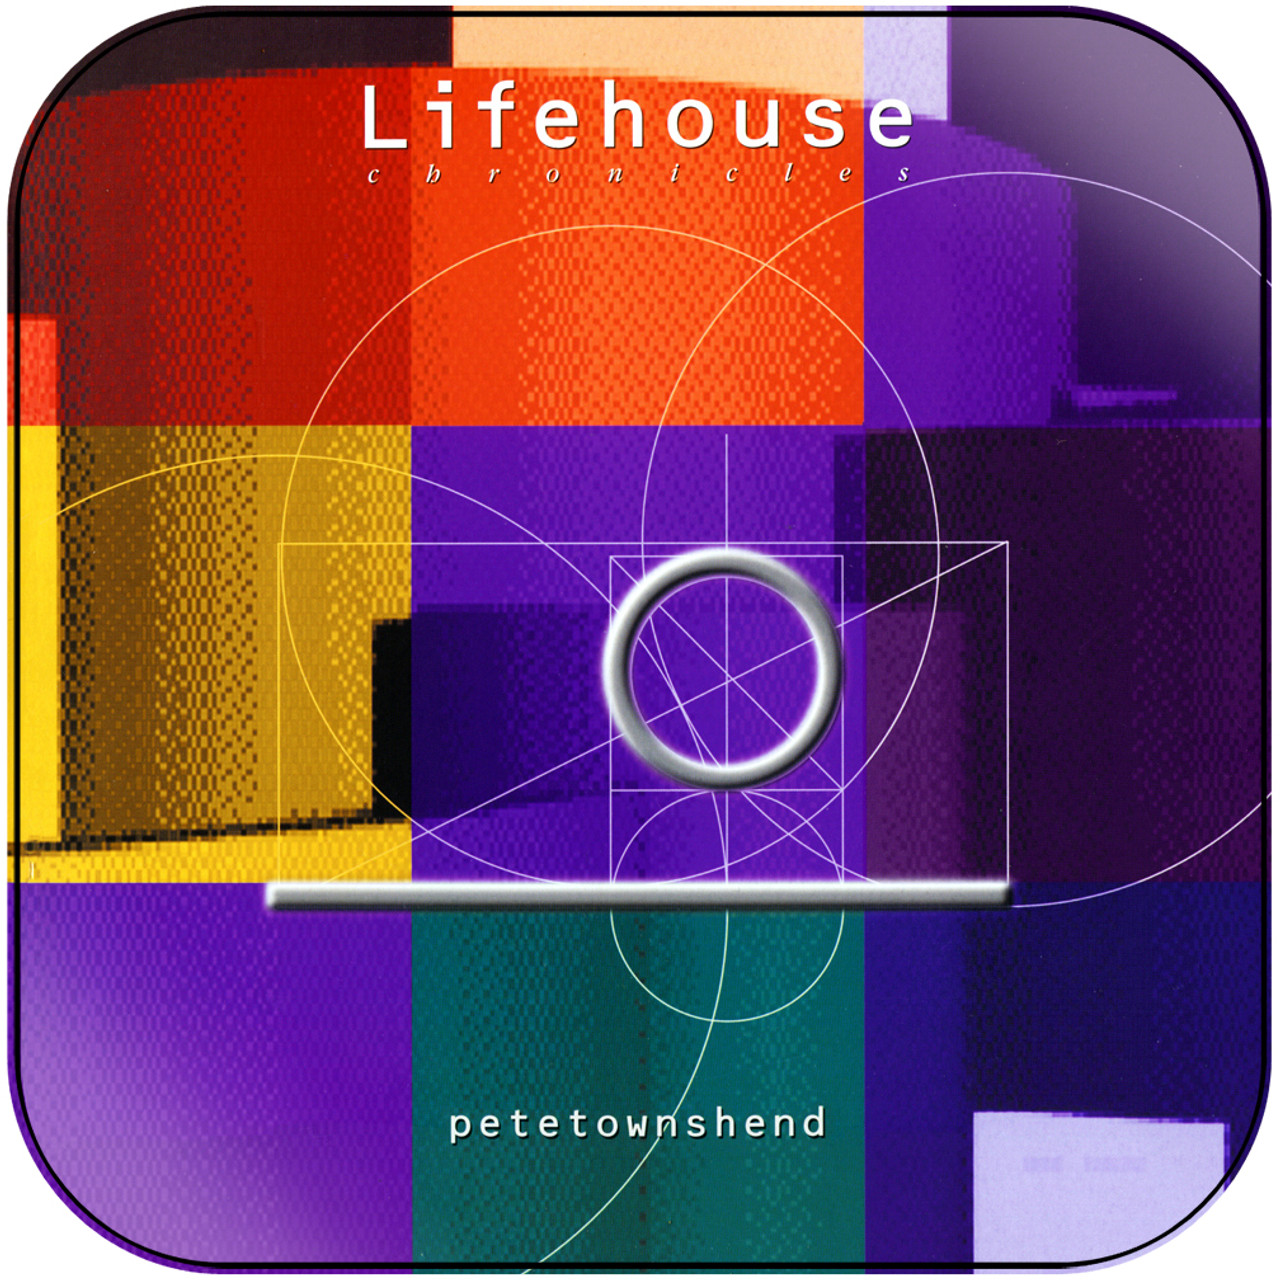 Pete Townshend - Lifehouse Chronicles Album Cover Sticker